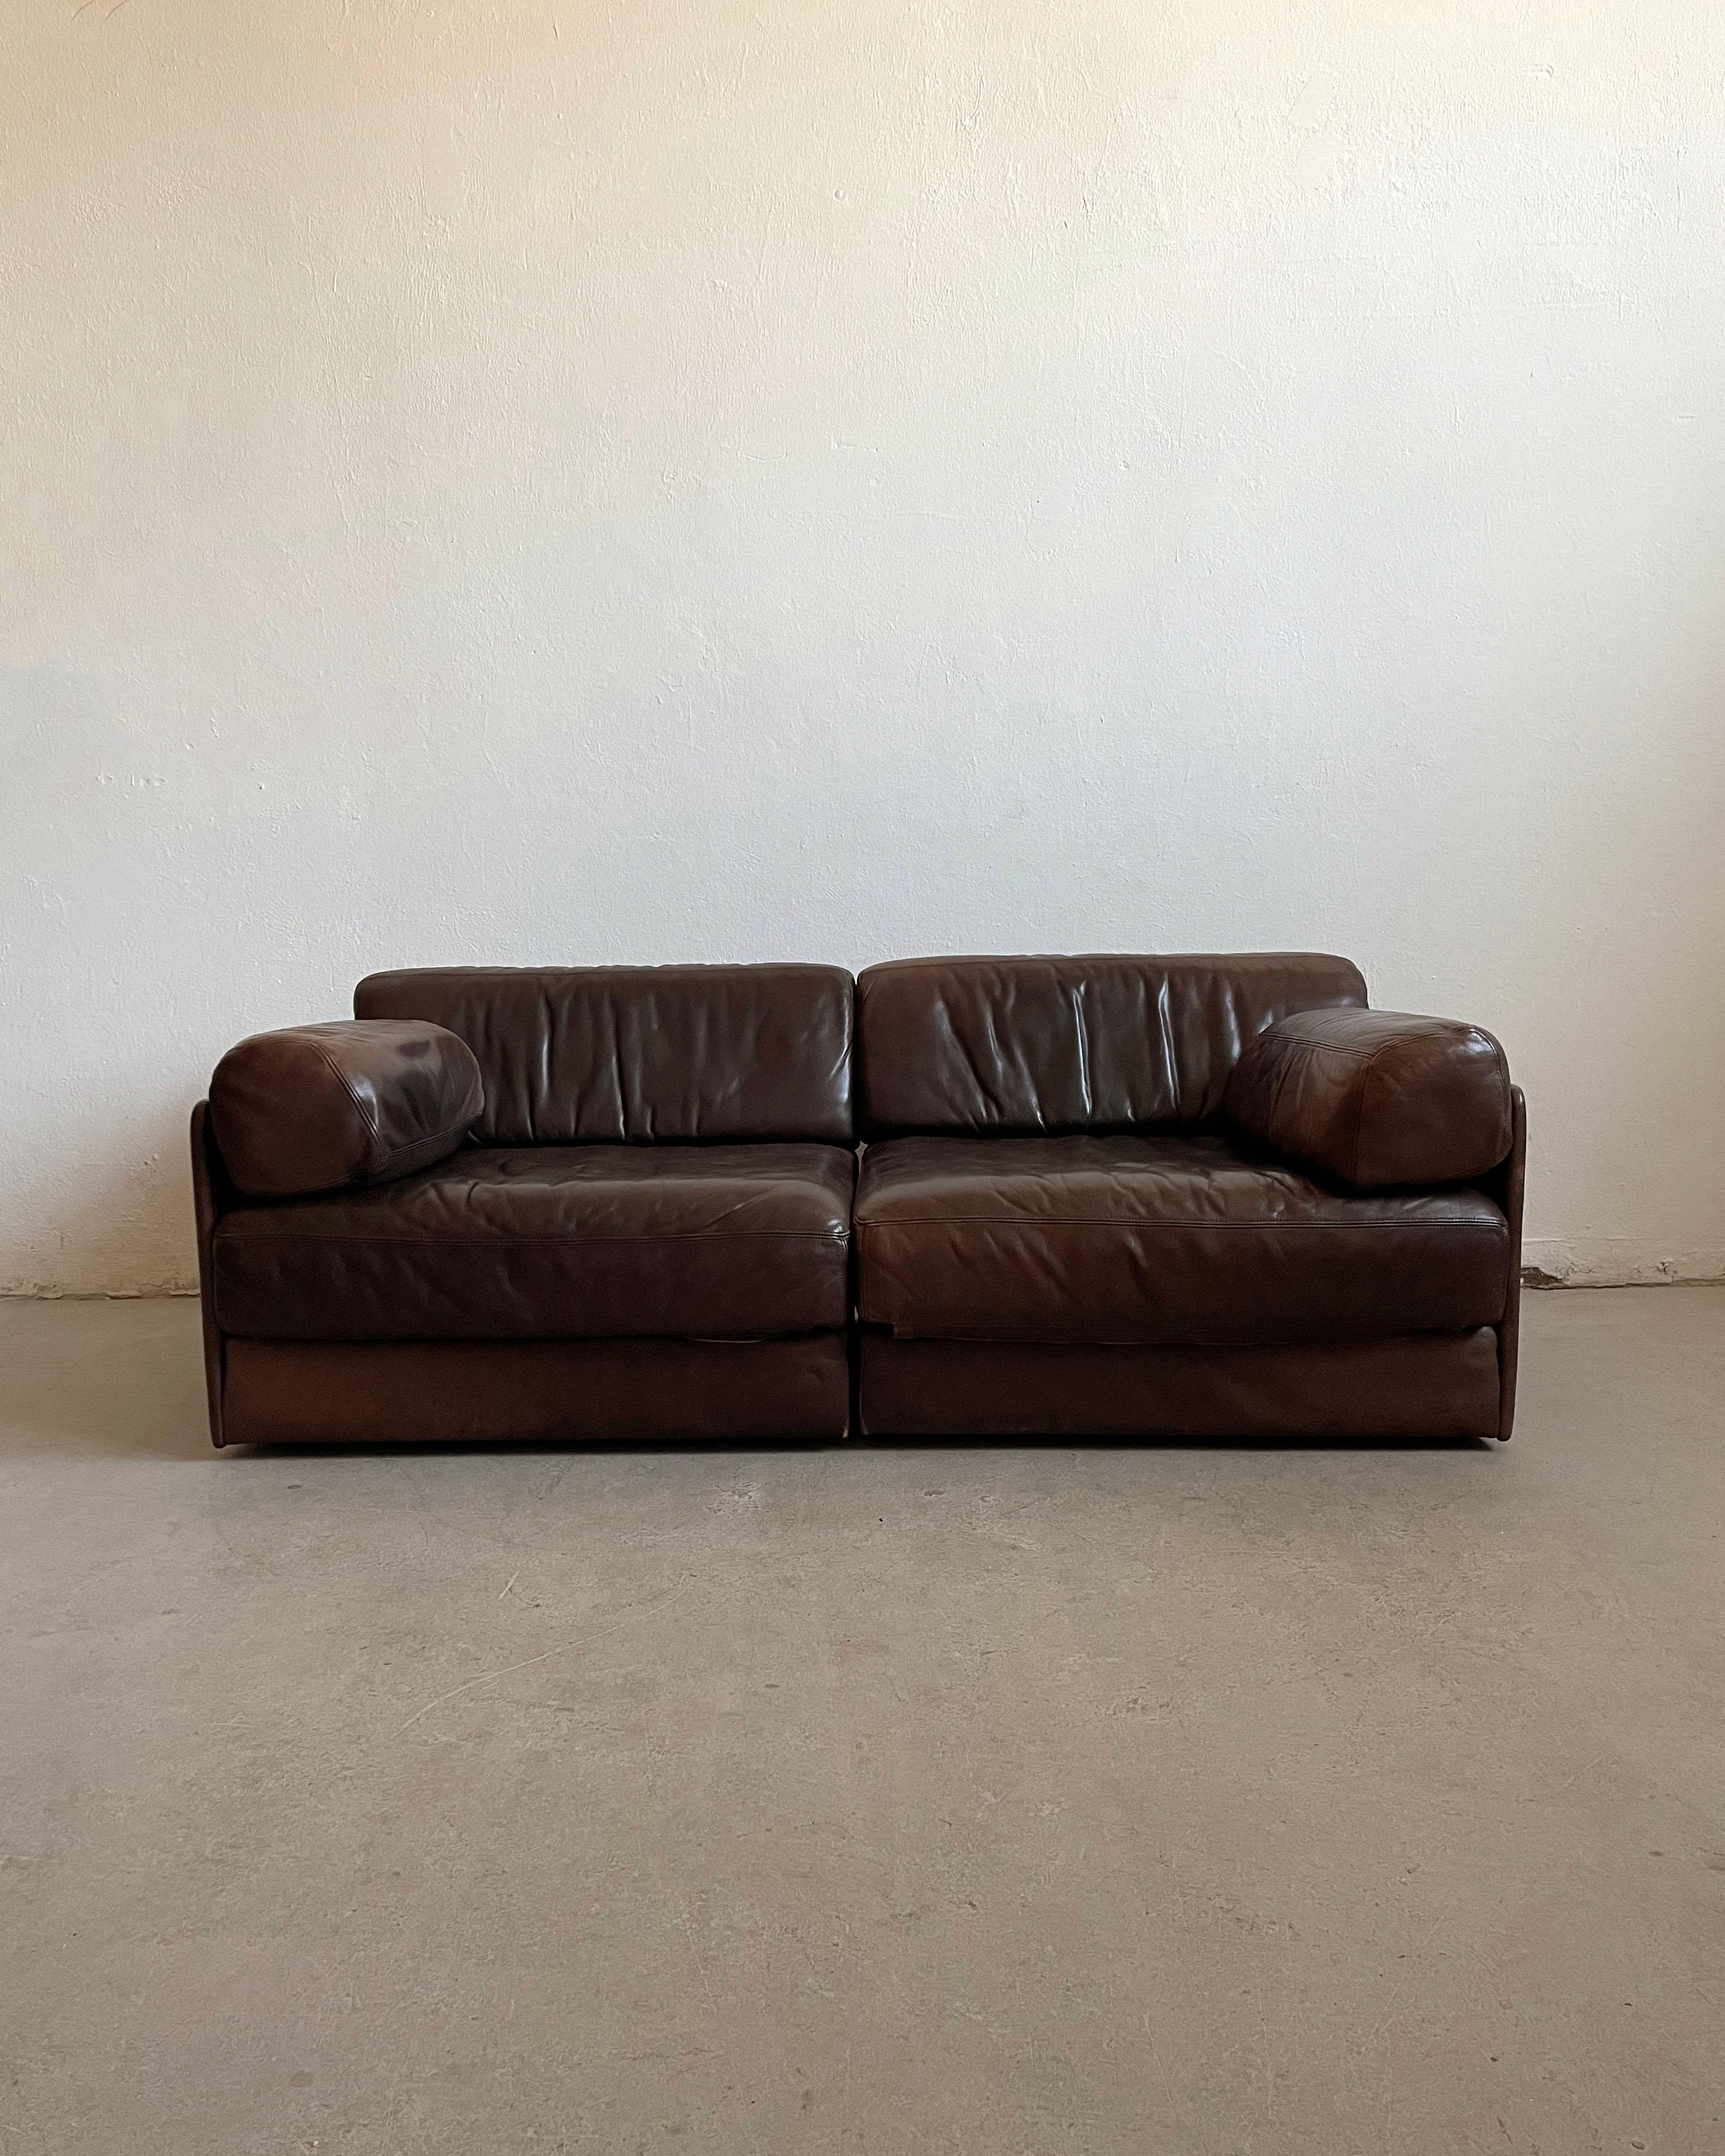 Mid-Century De Sede Ds 76 Modular Sofa Bed, 2-piece Brown Leather Modules, 1970s For Sale 4